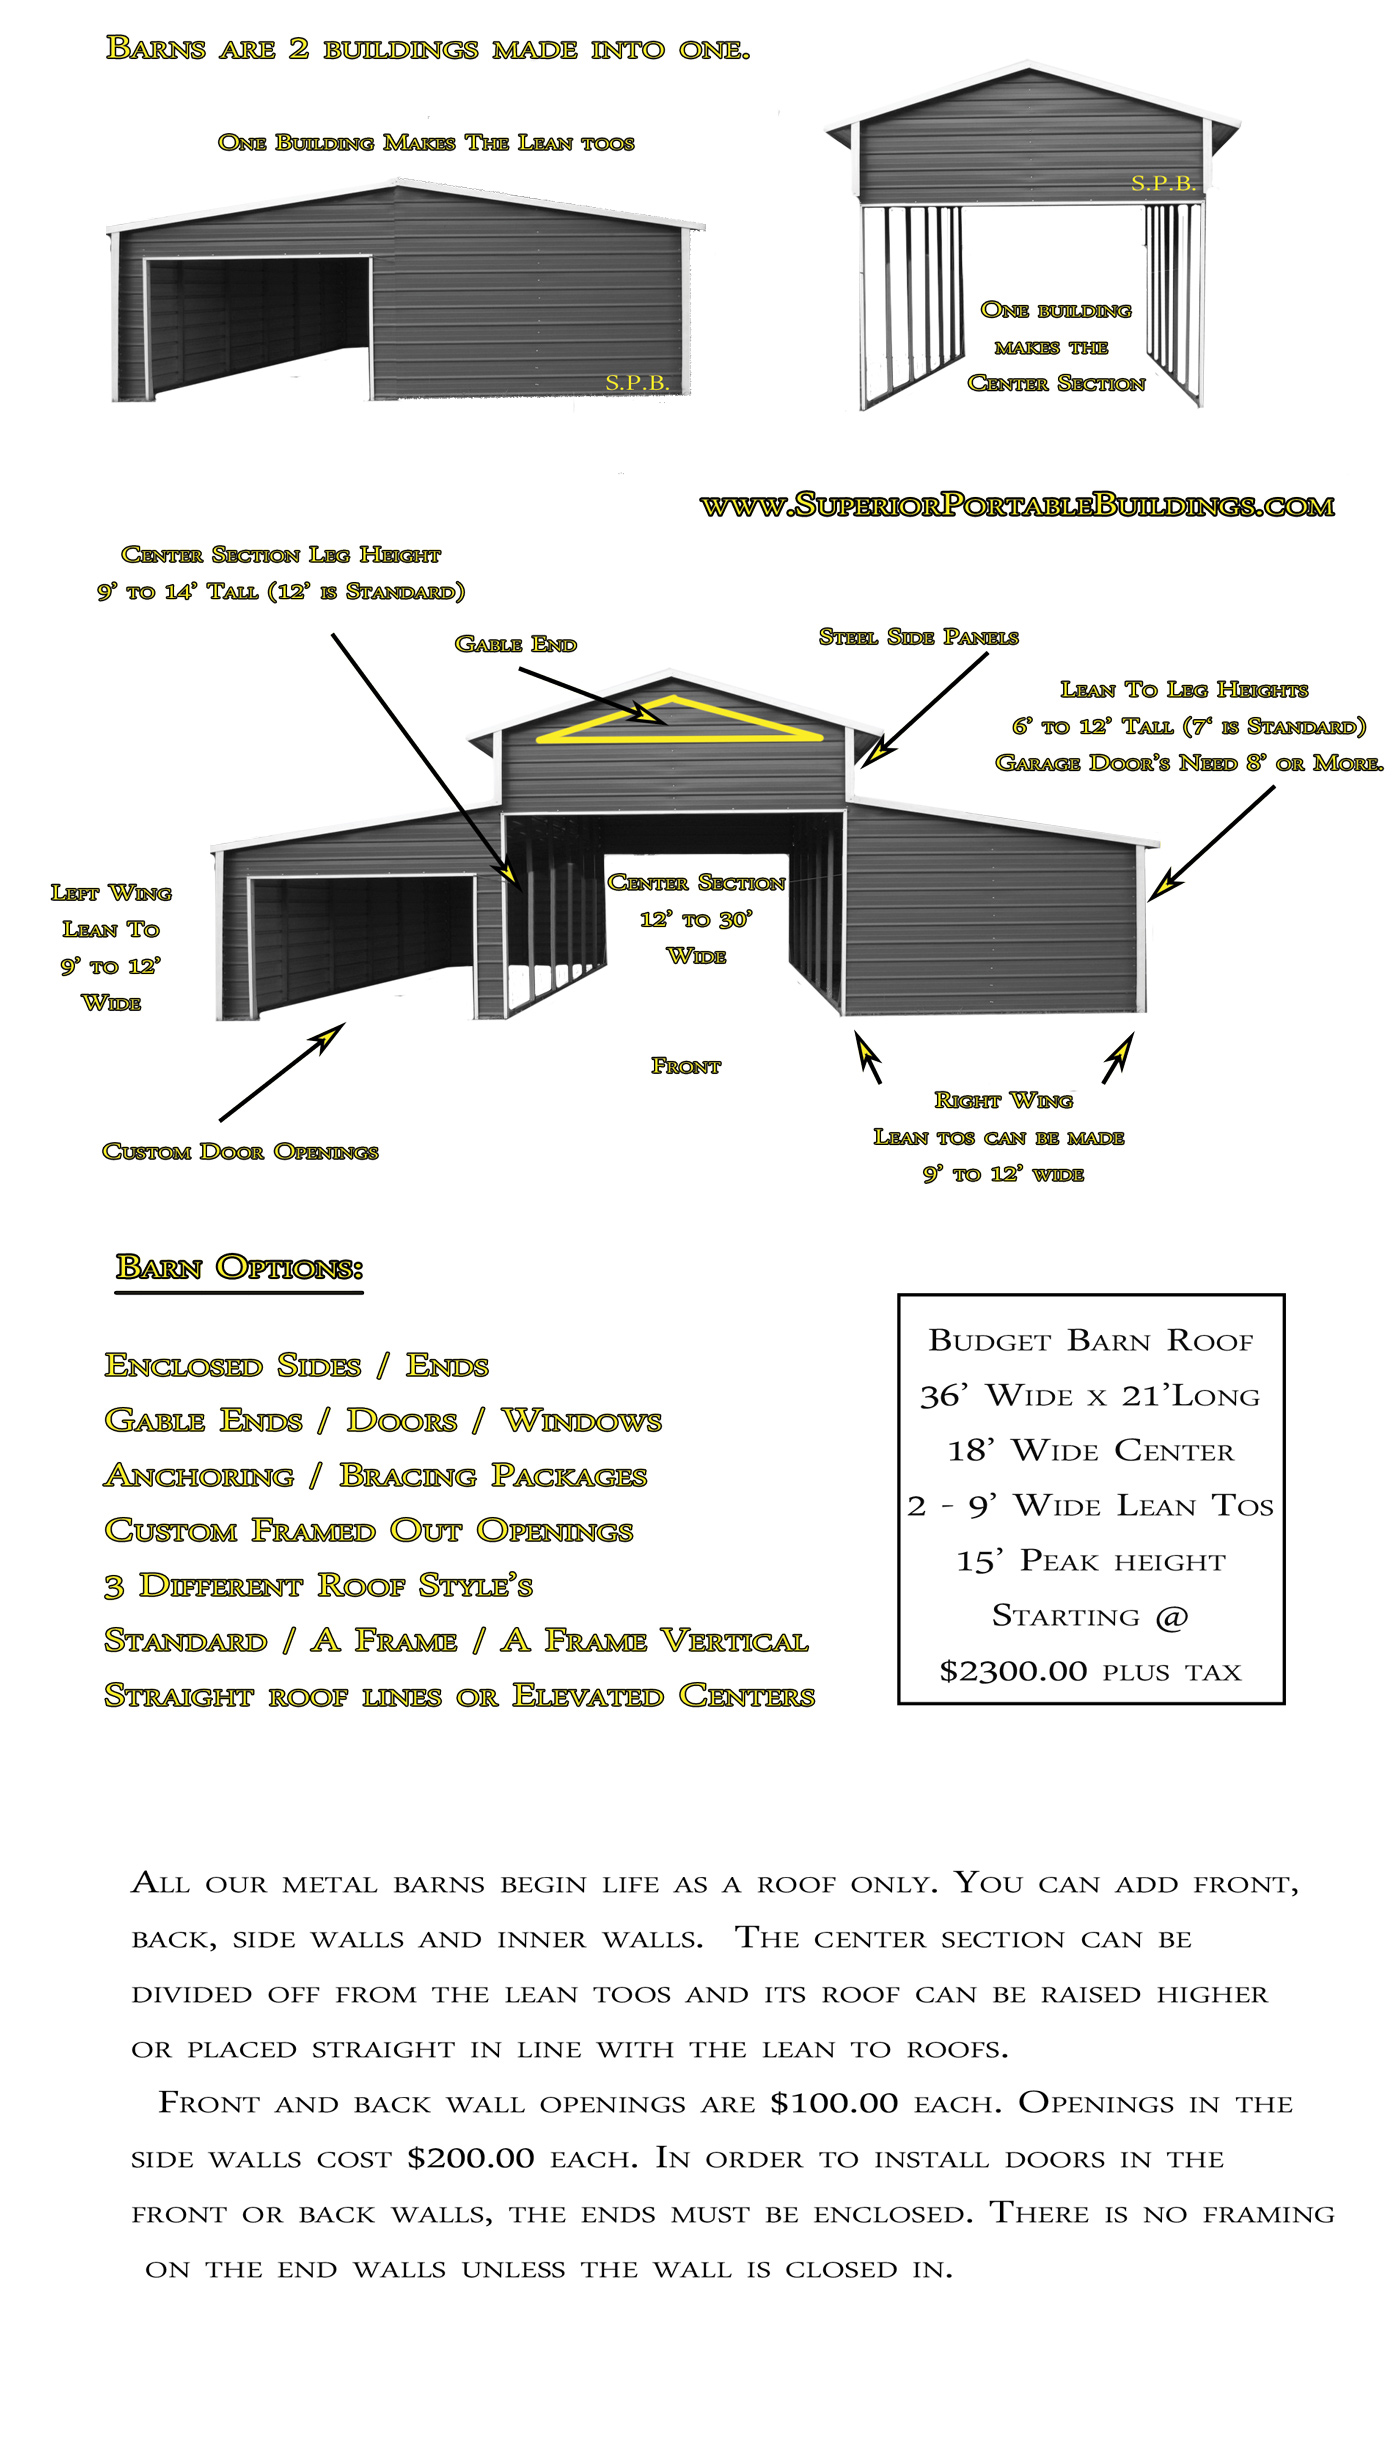 Metal barn information